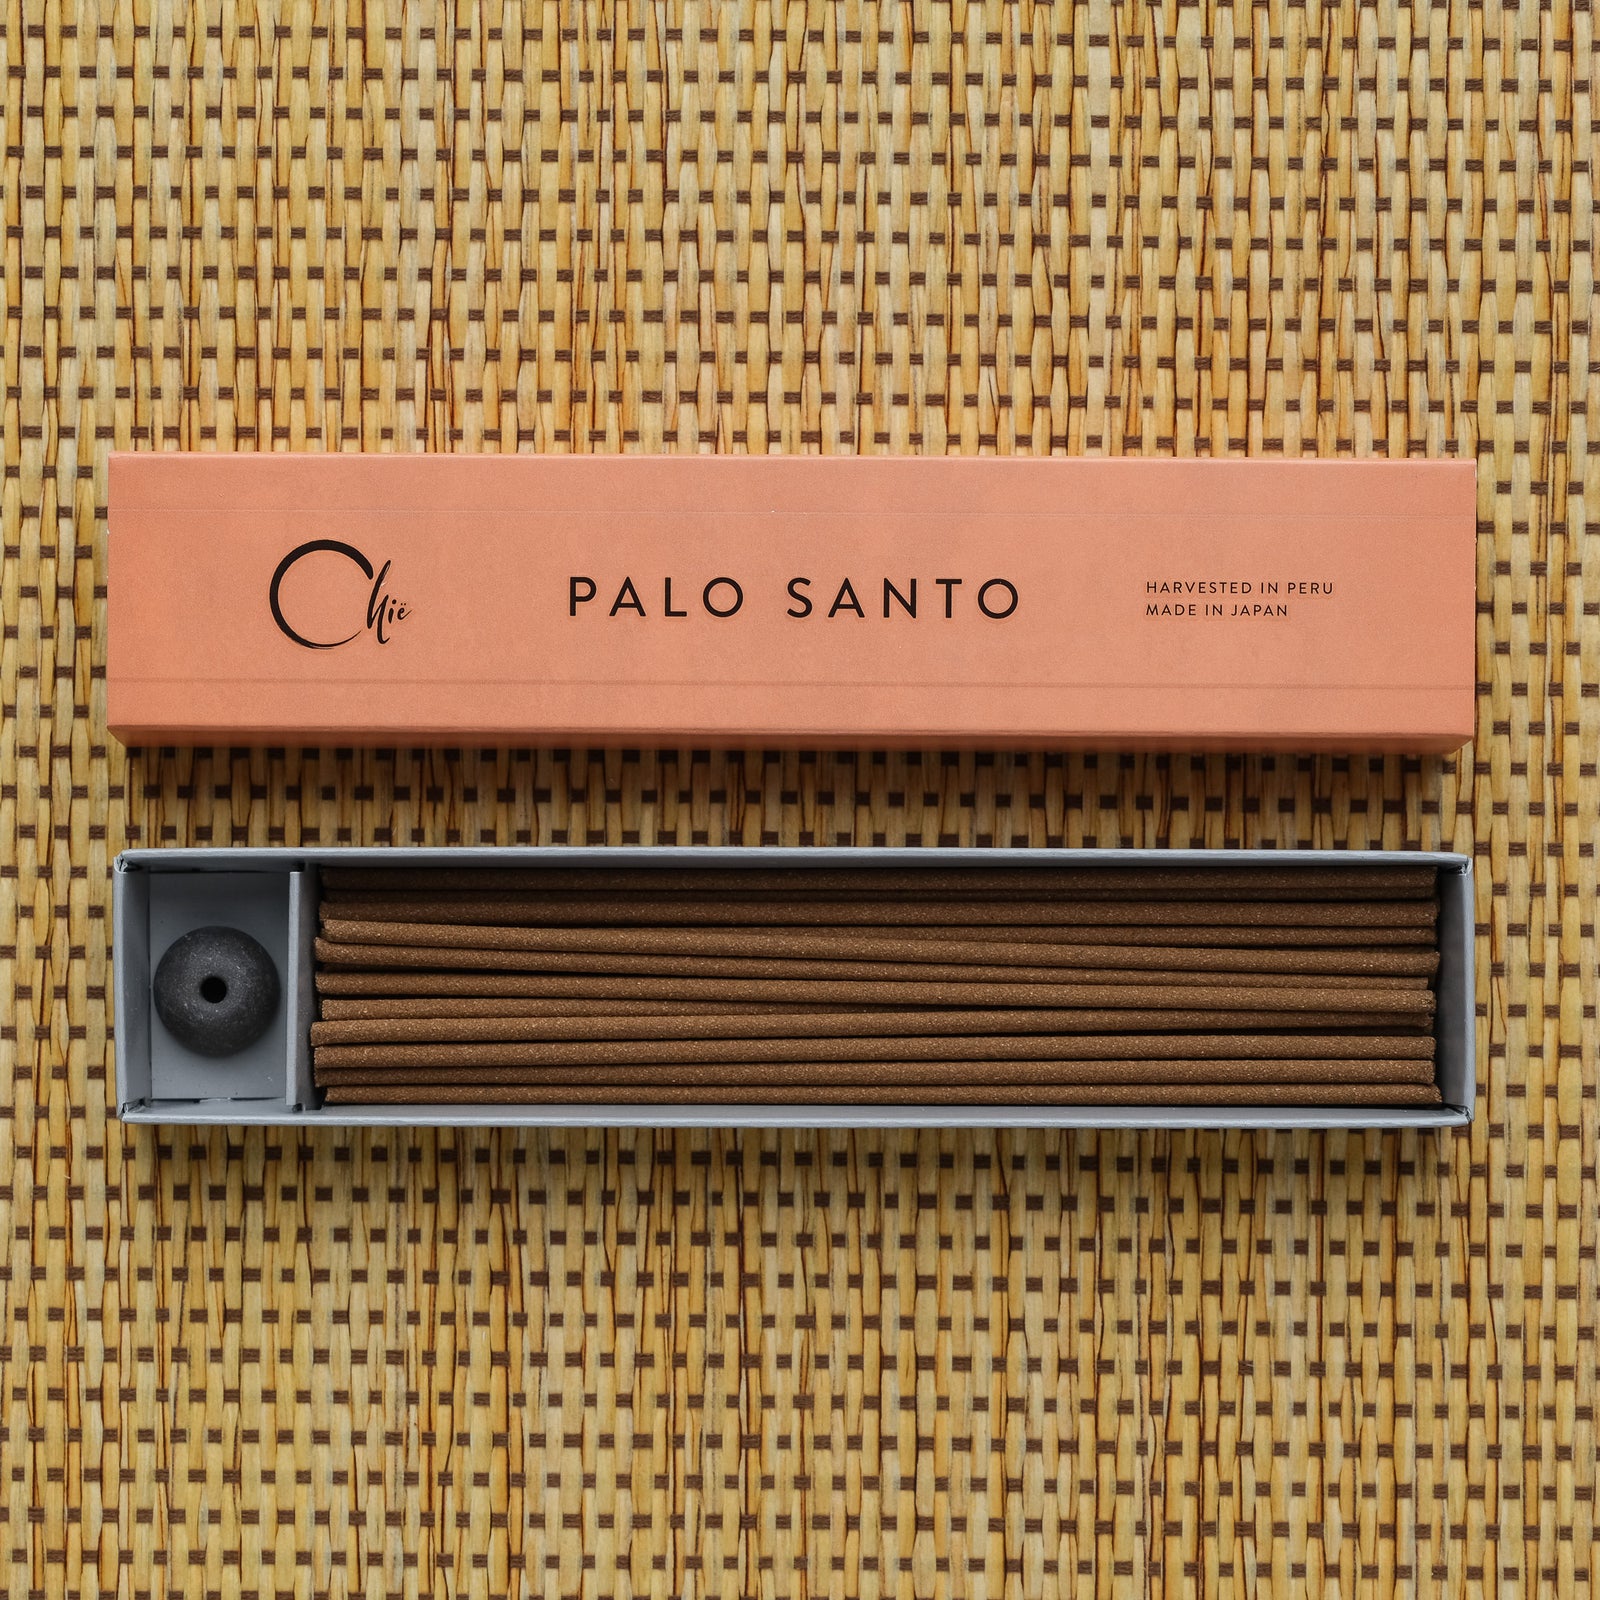 Chie Palo Santo Natural Incense